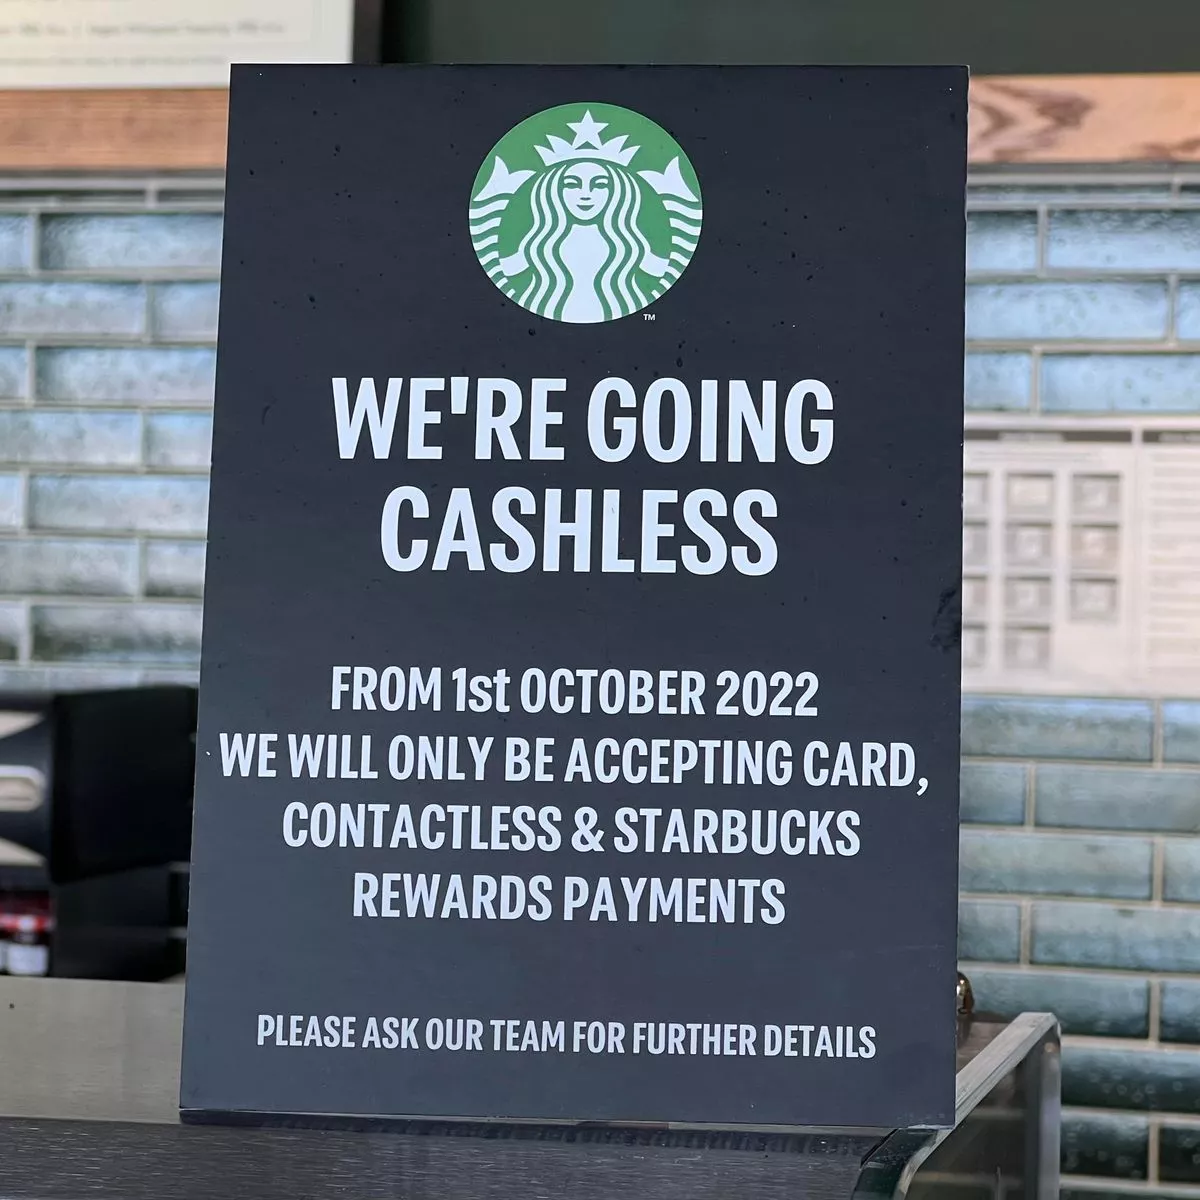 Why Is Starbucks Going Cashless